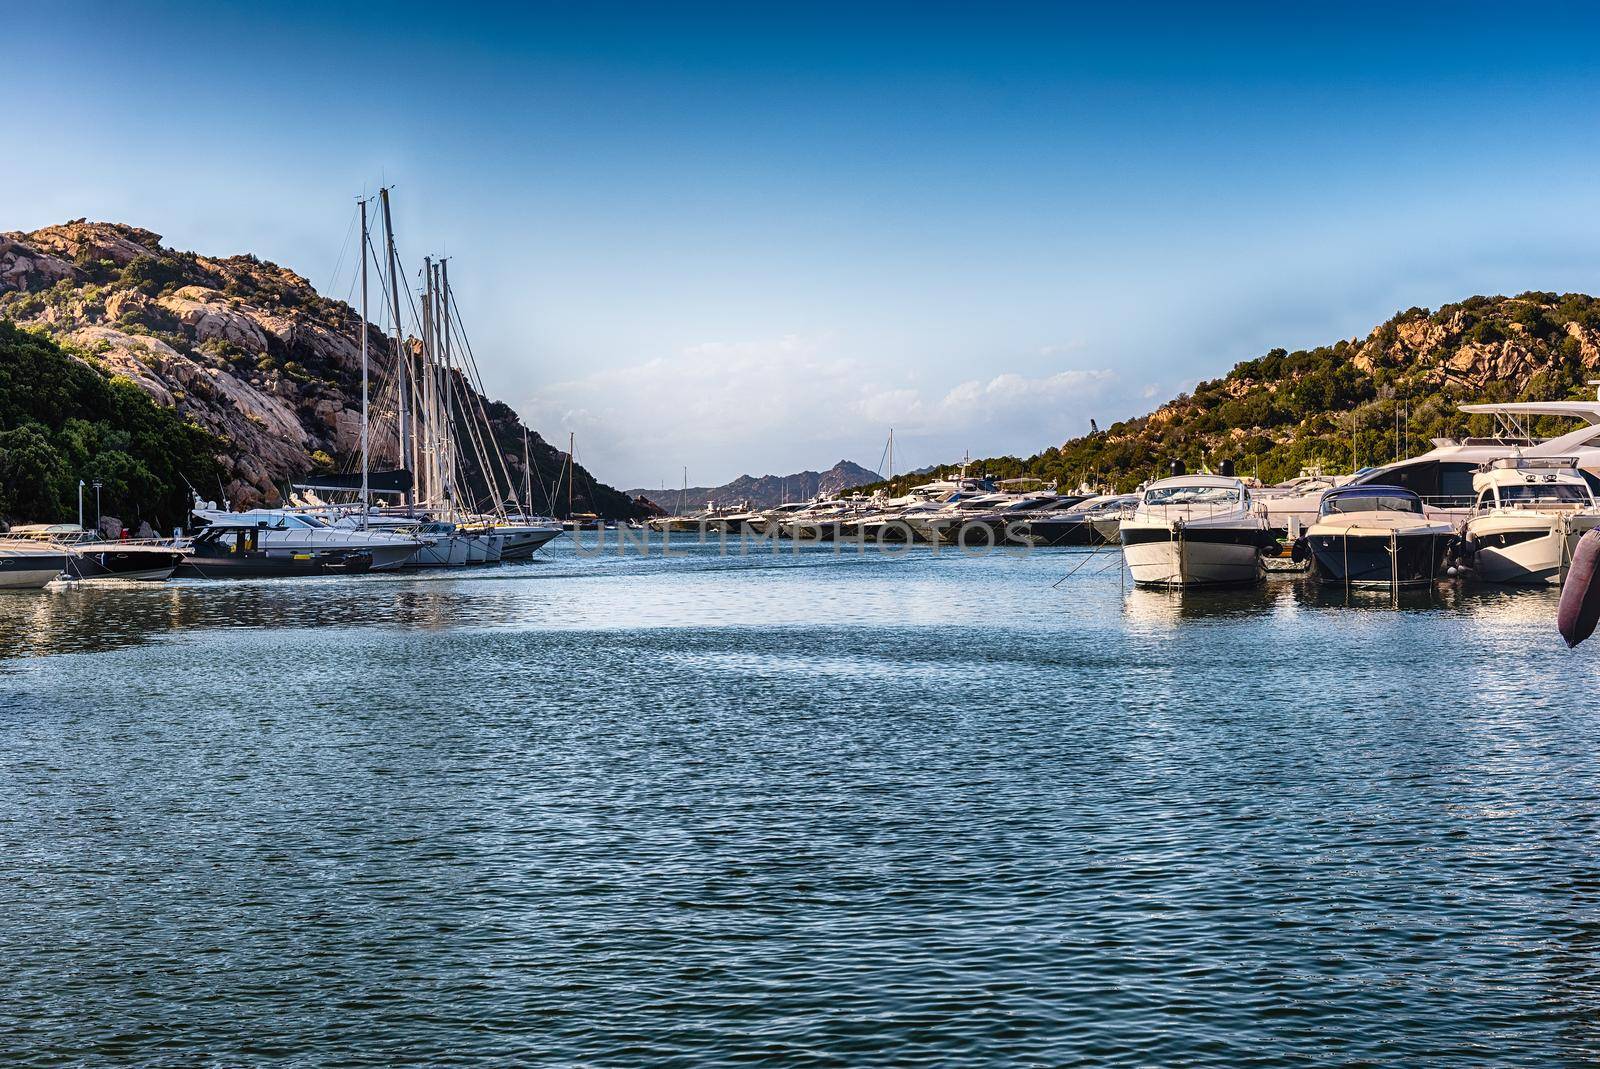 The scenic harbor of Poltu Quatu, Costa Smeralda, Sardinia, Italy by marcorubino